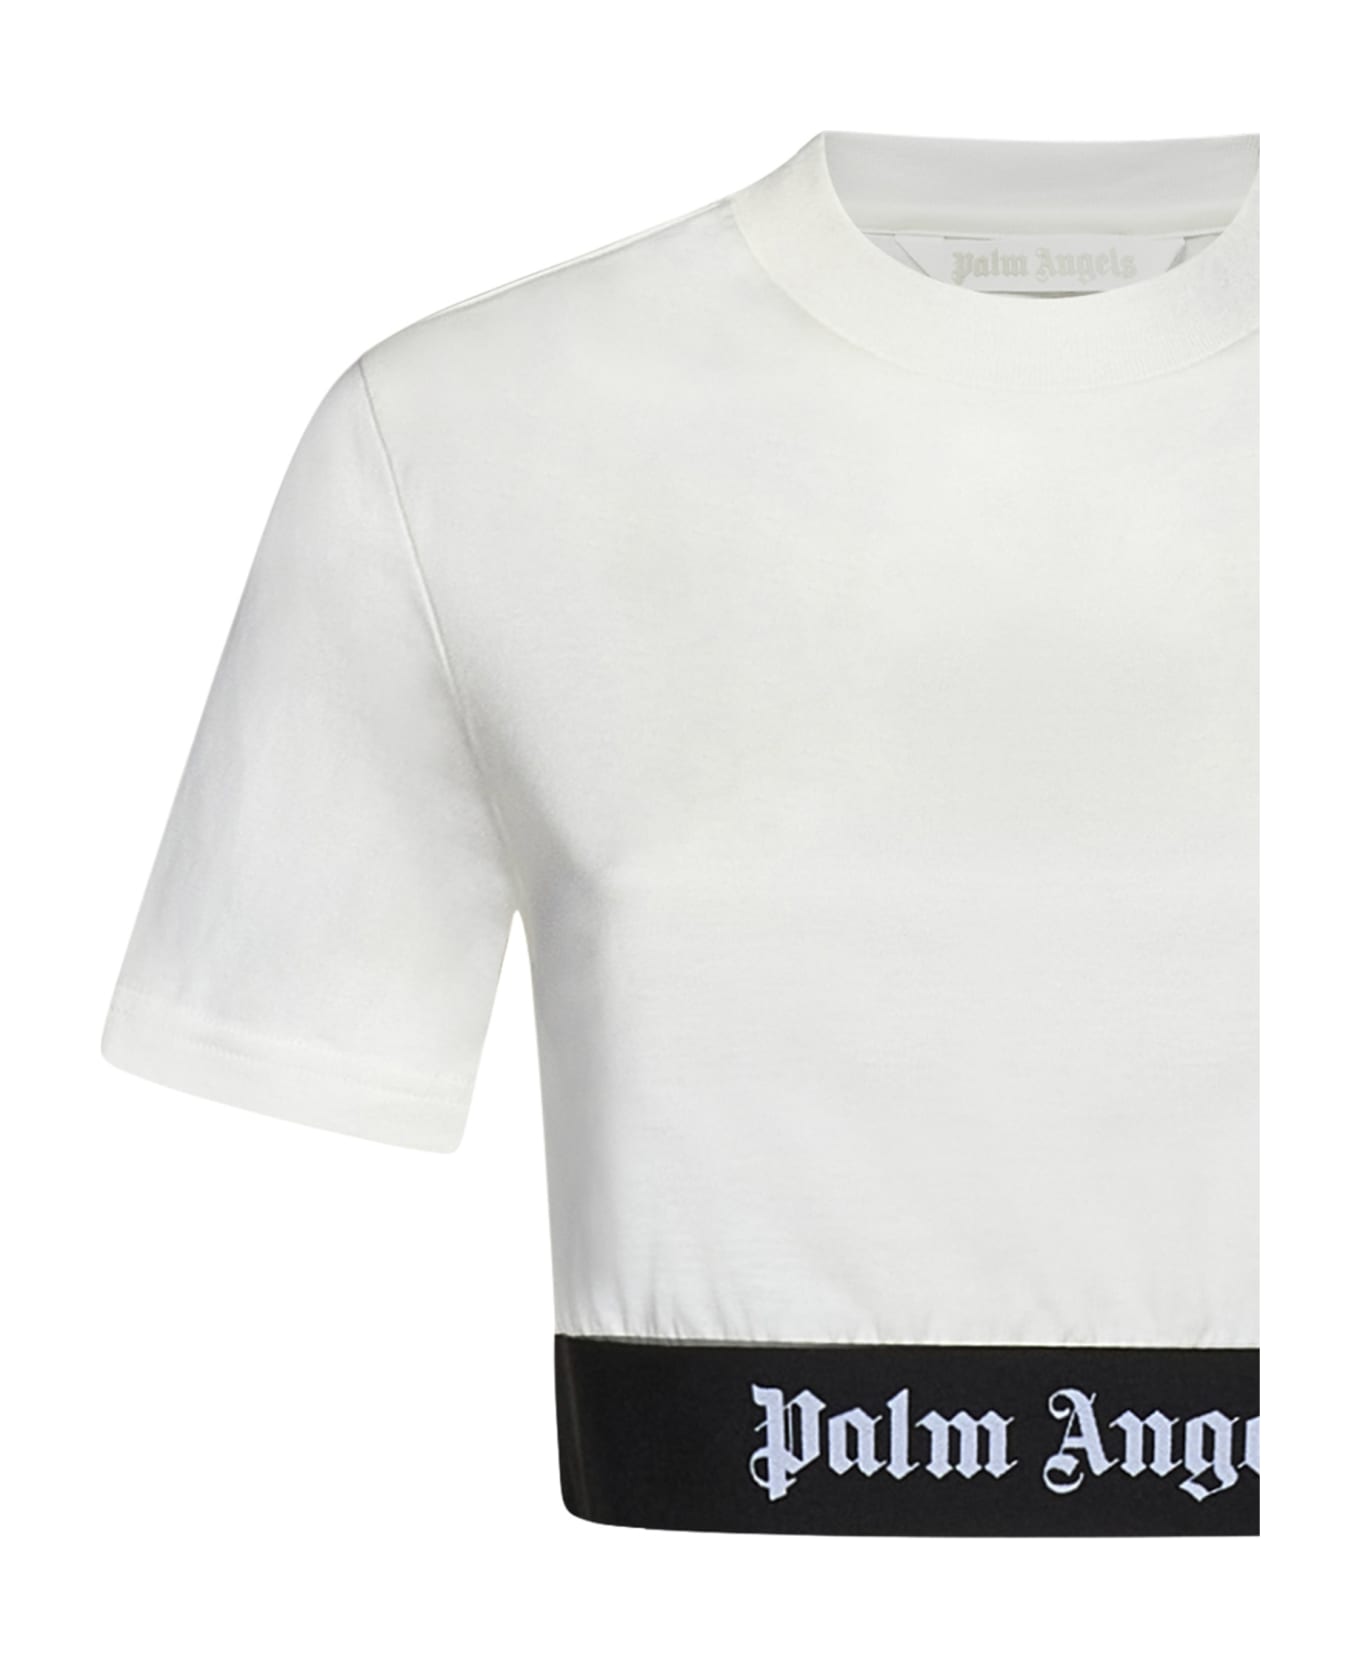 Palm Angels Logo Tape Crop T-shirt - White